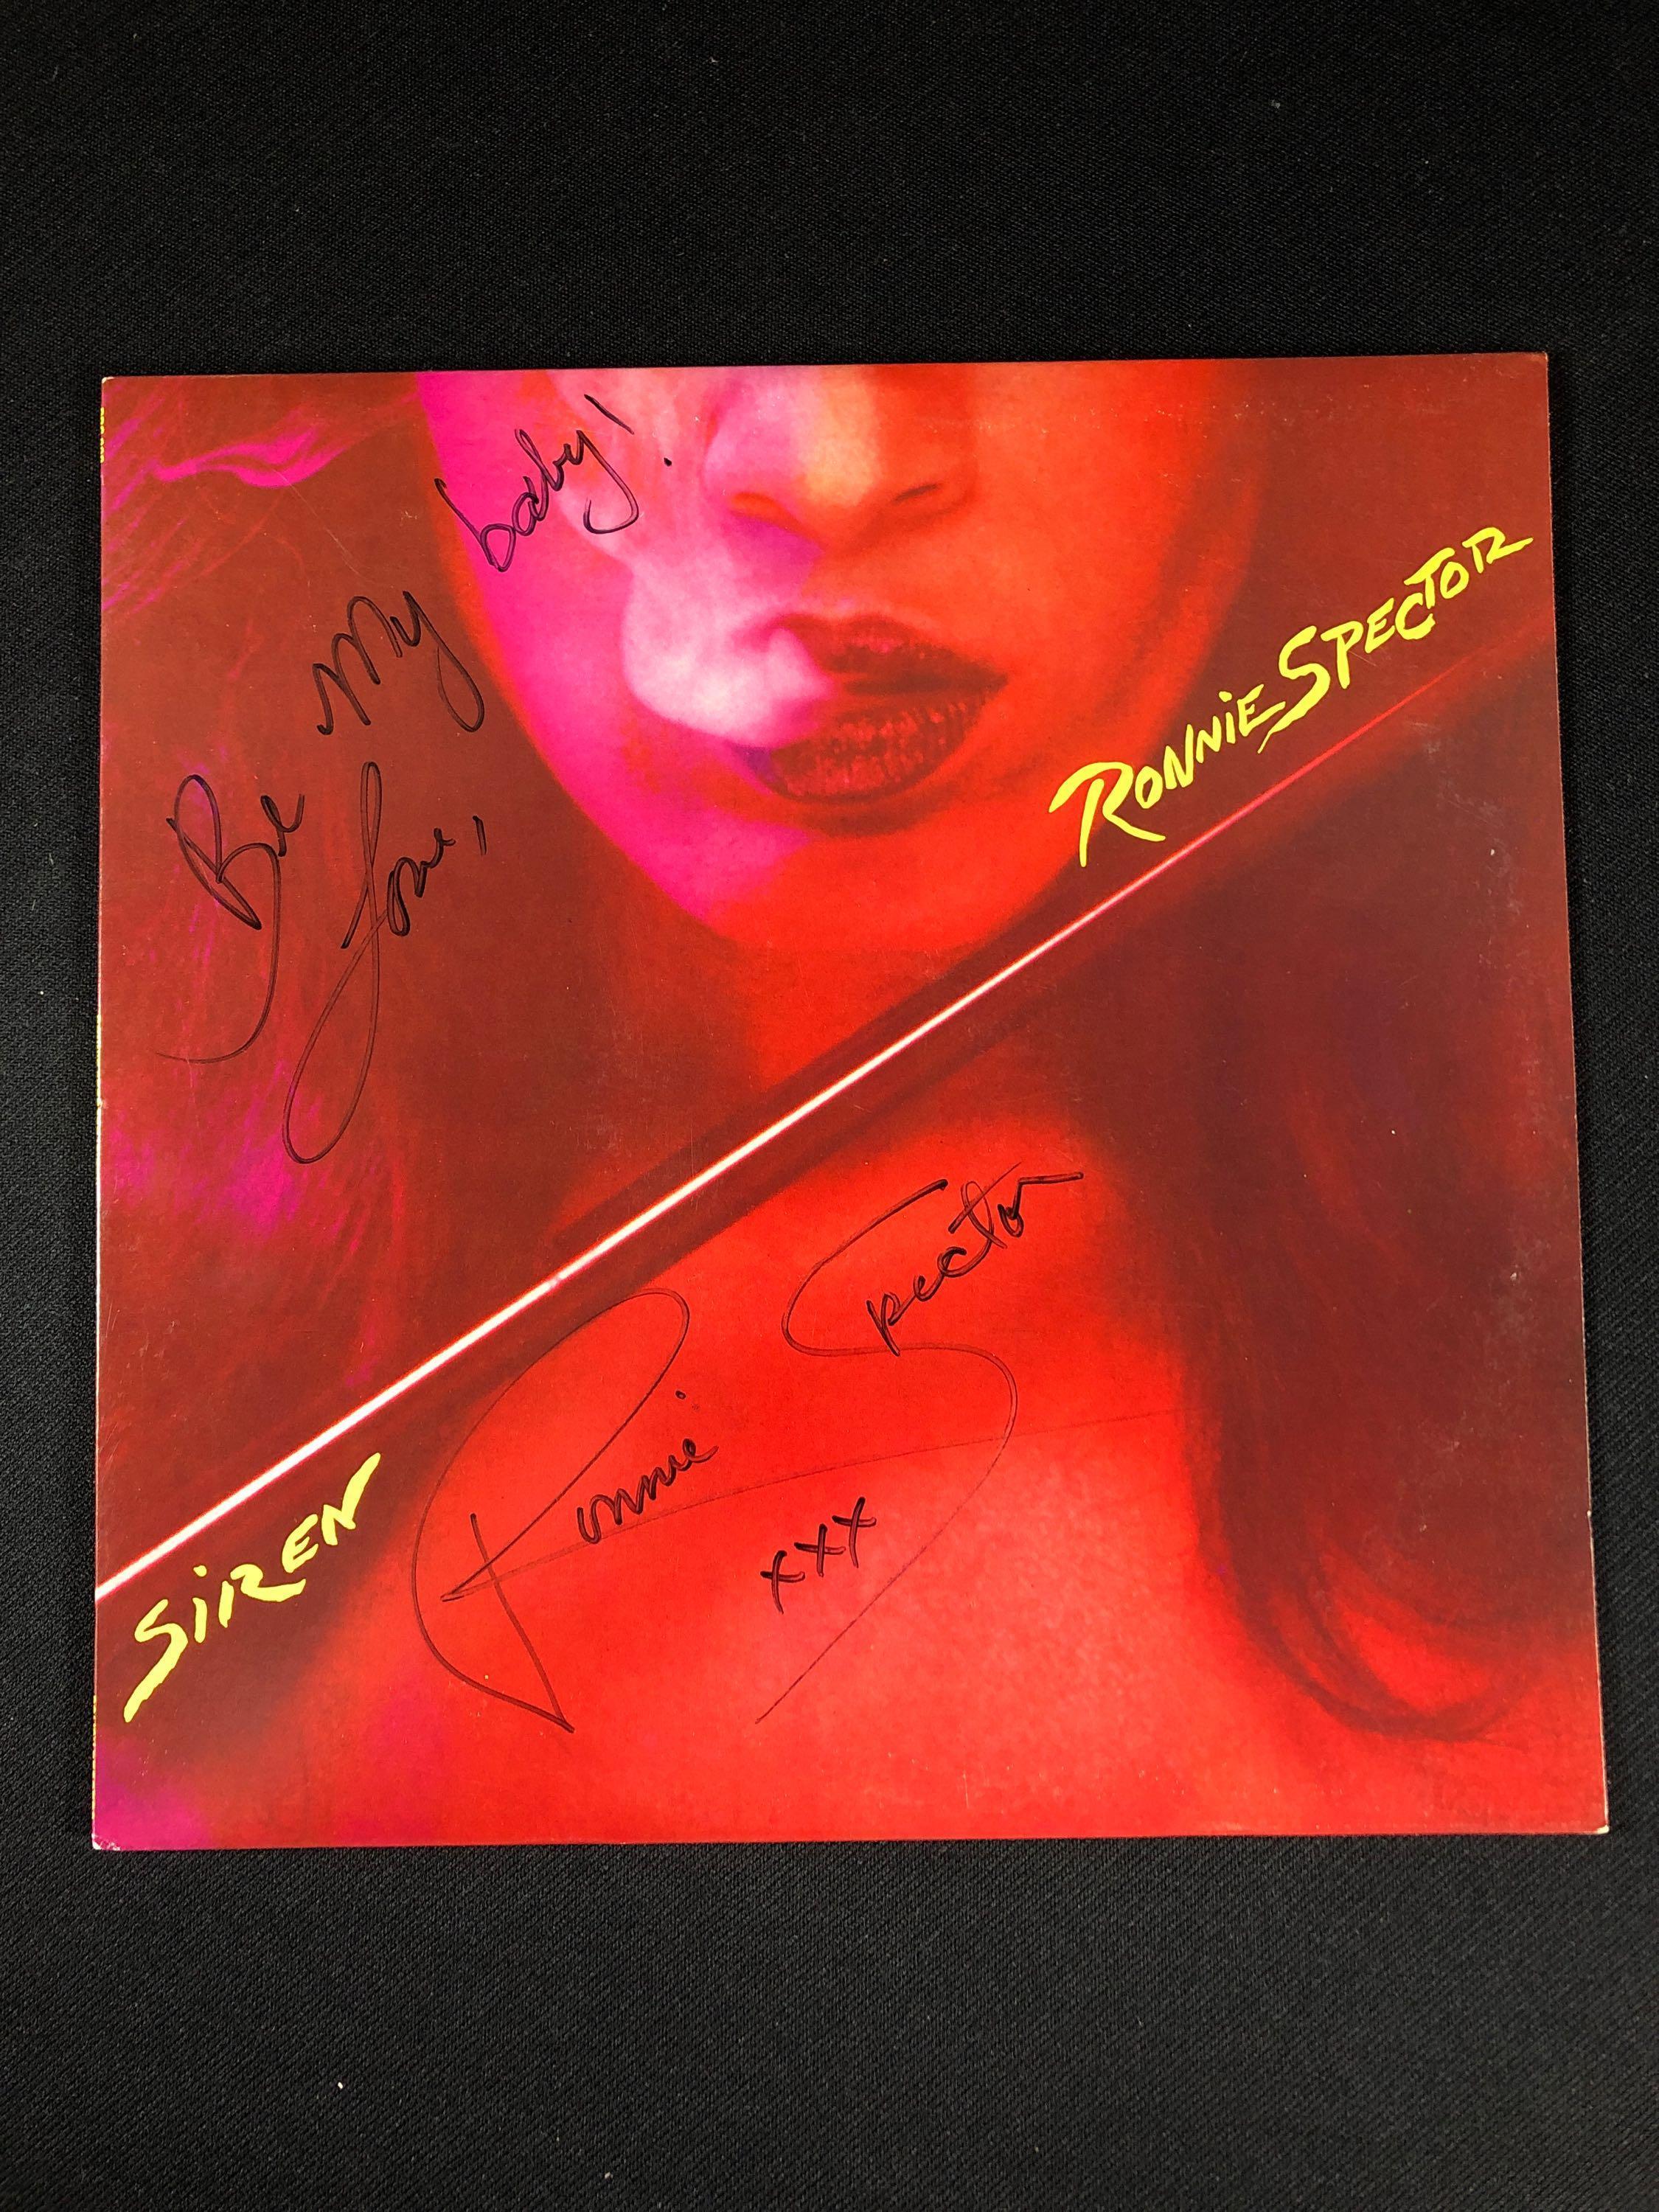 Ronnie Spector "Siren" Autographed Album